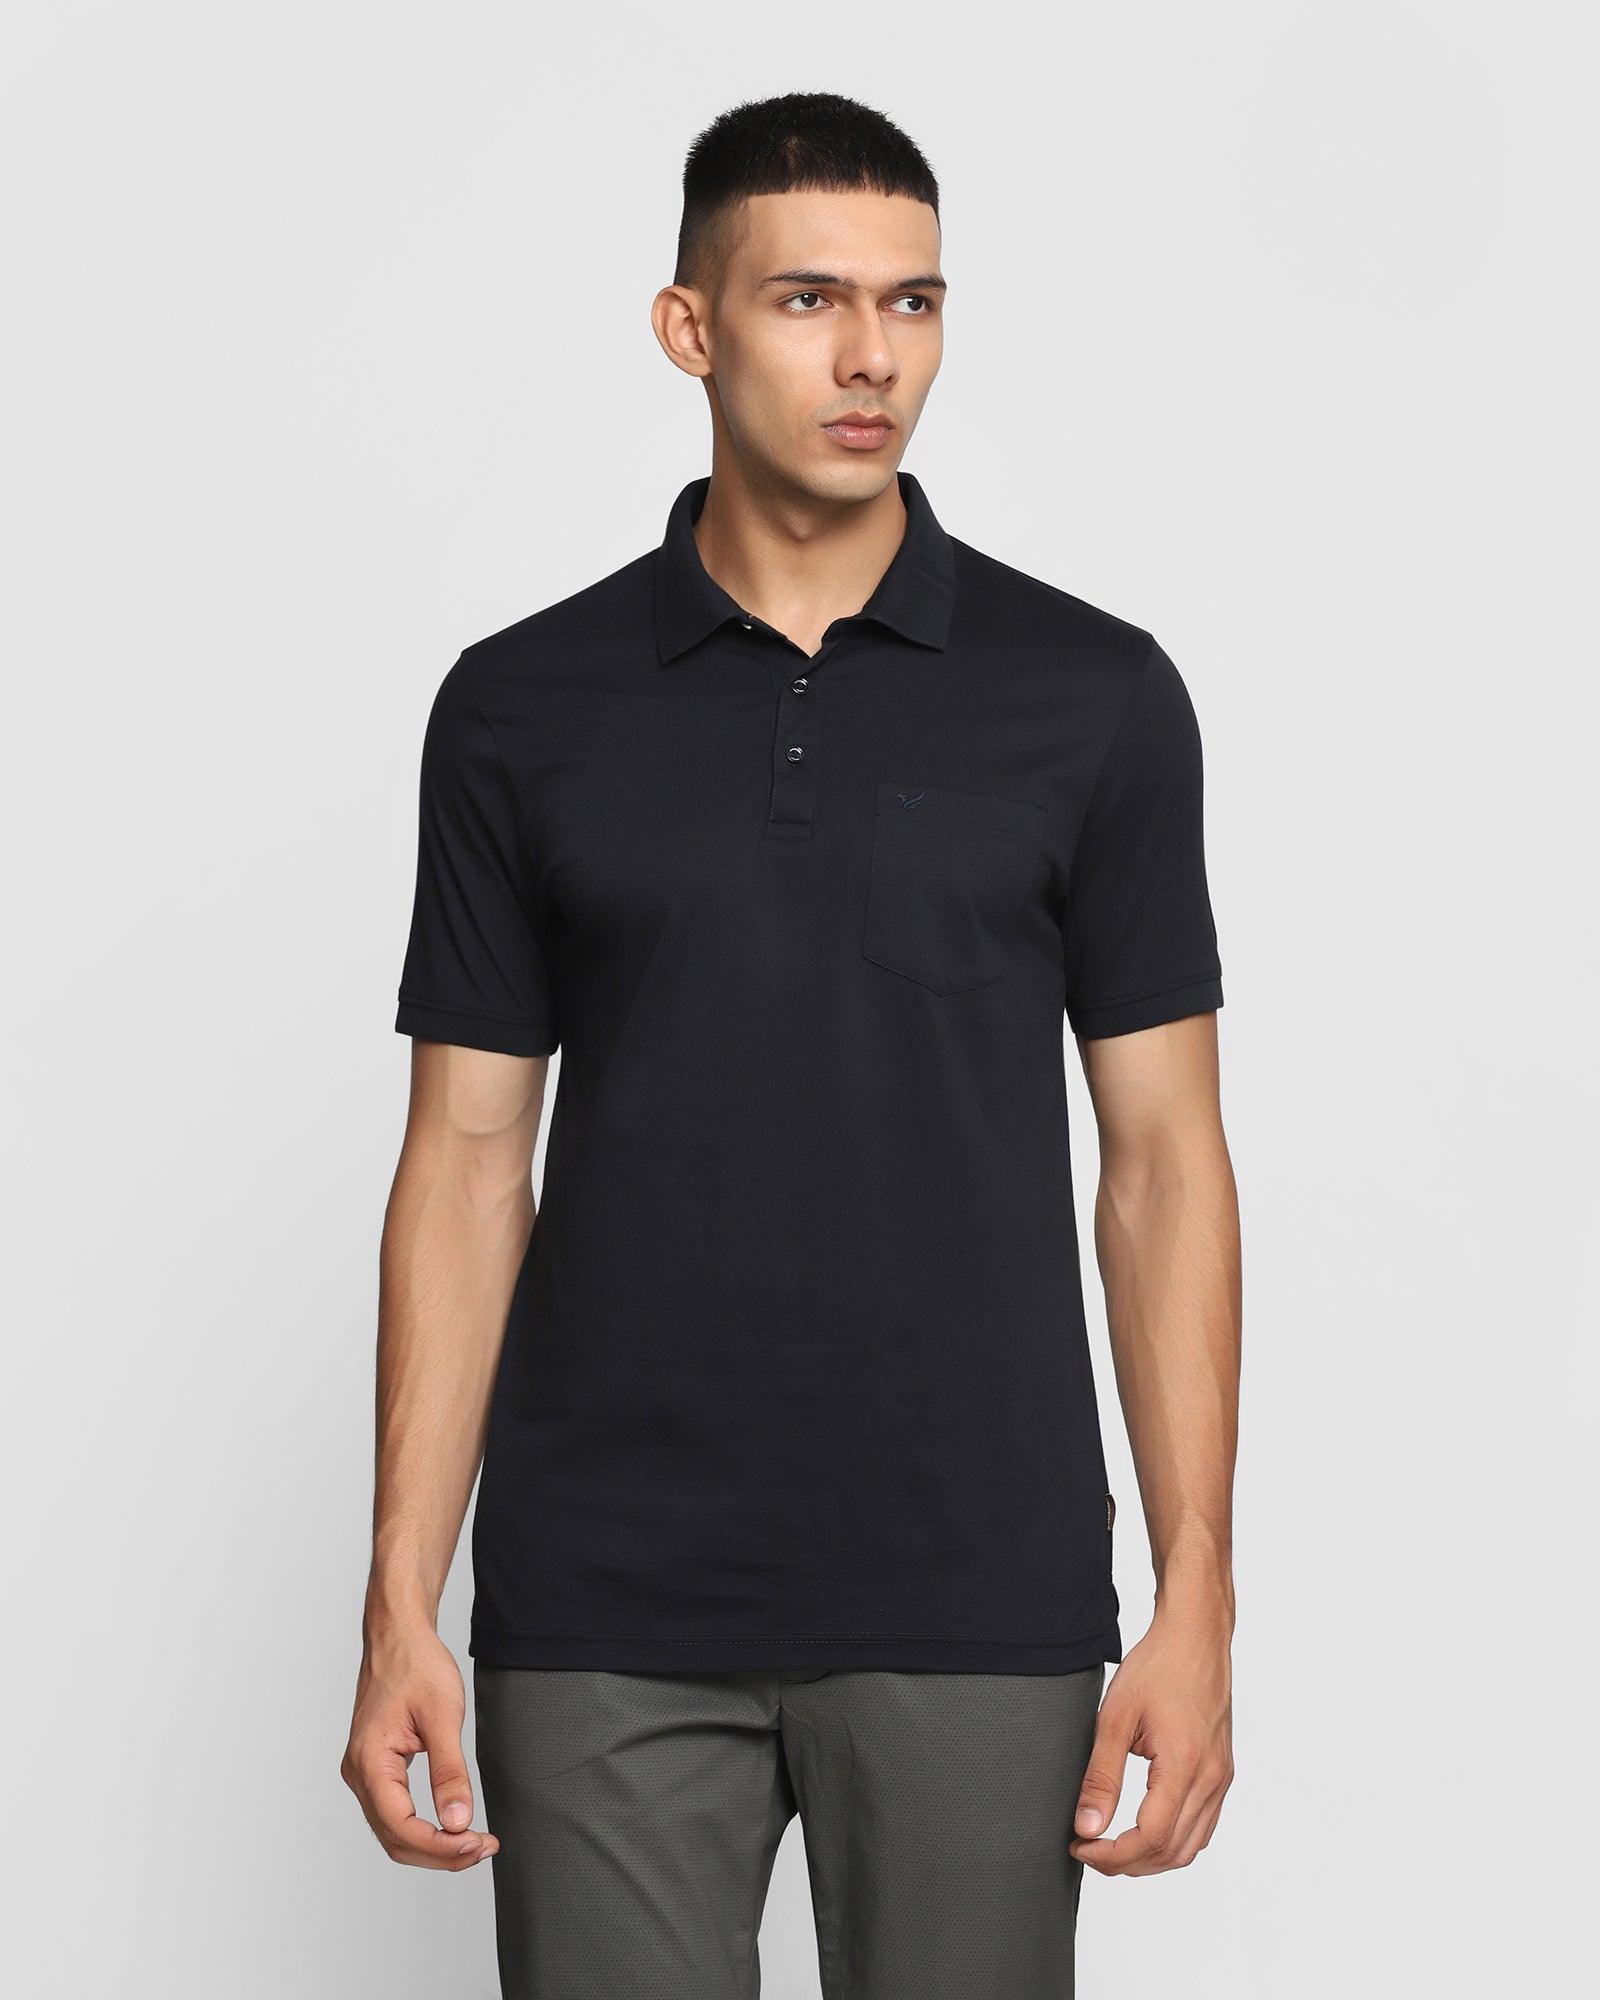 Polo Navy Solid T Shirt - David